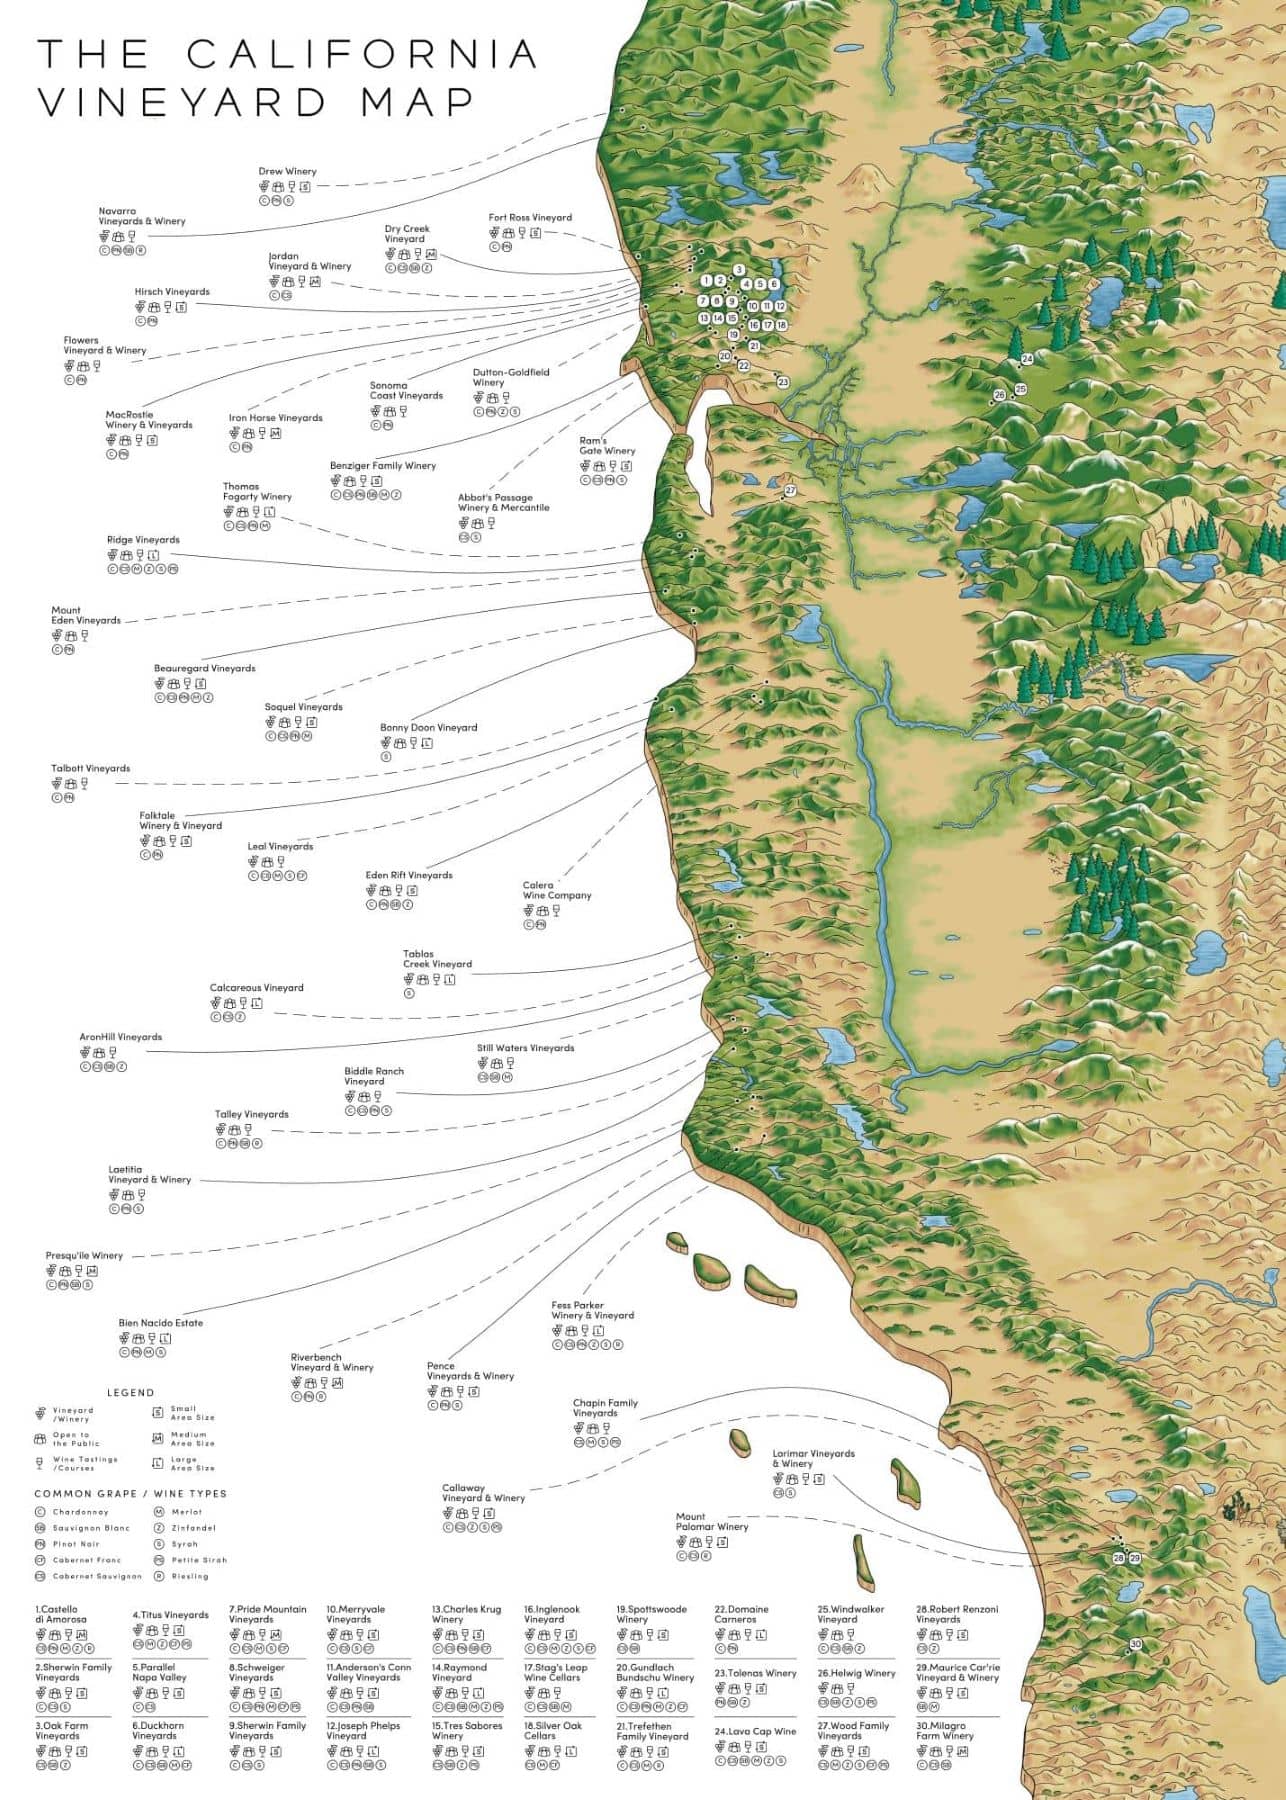 The California Vineyard Map